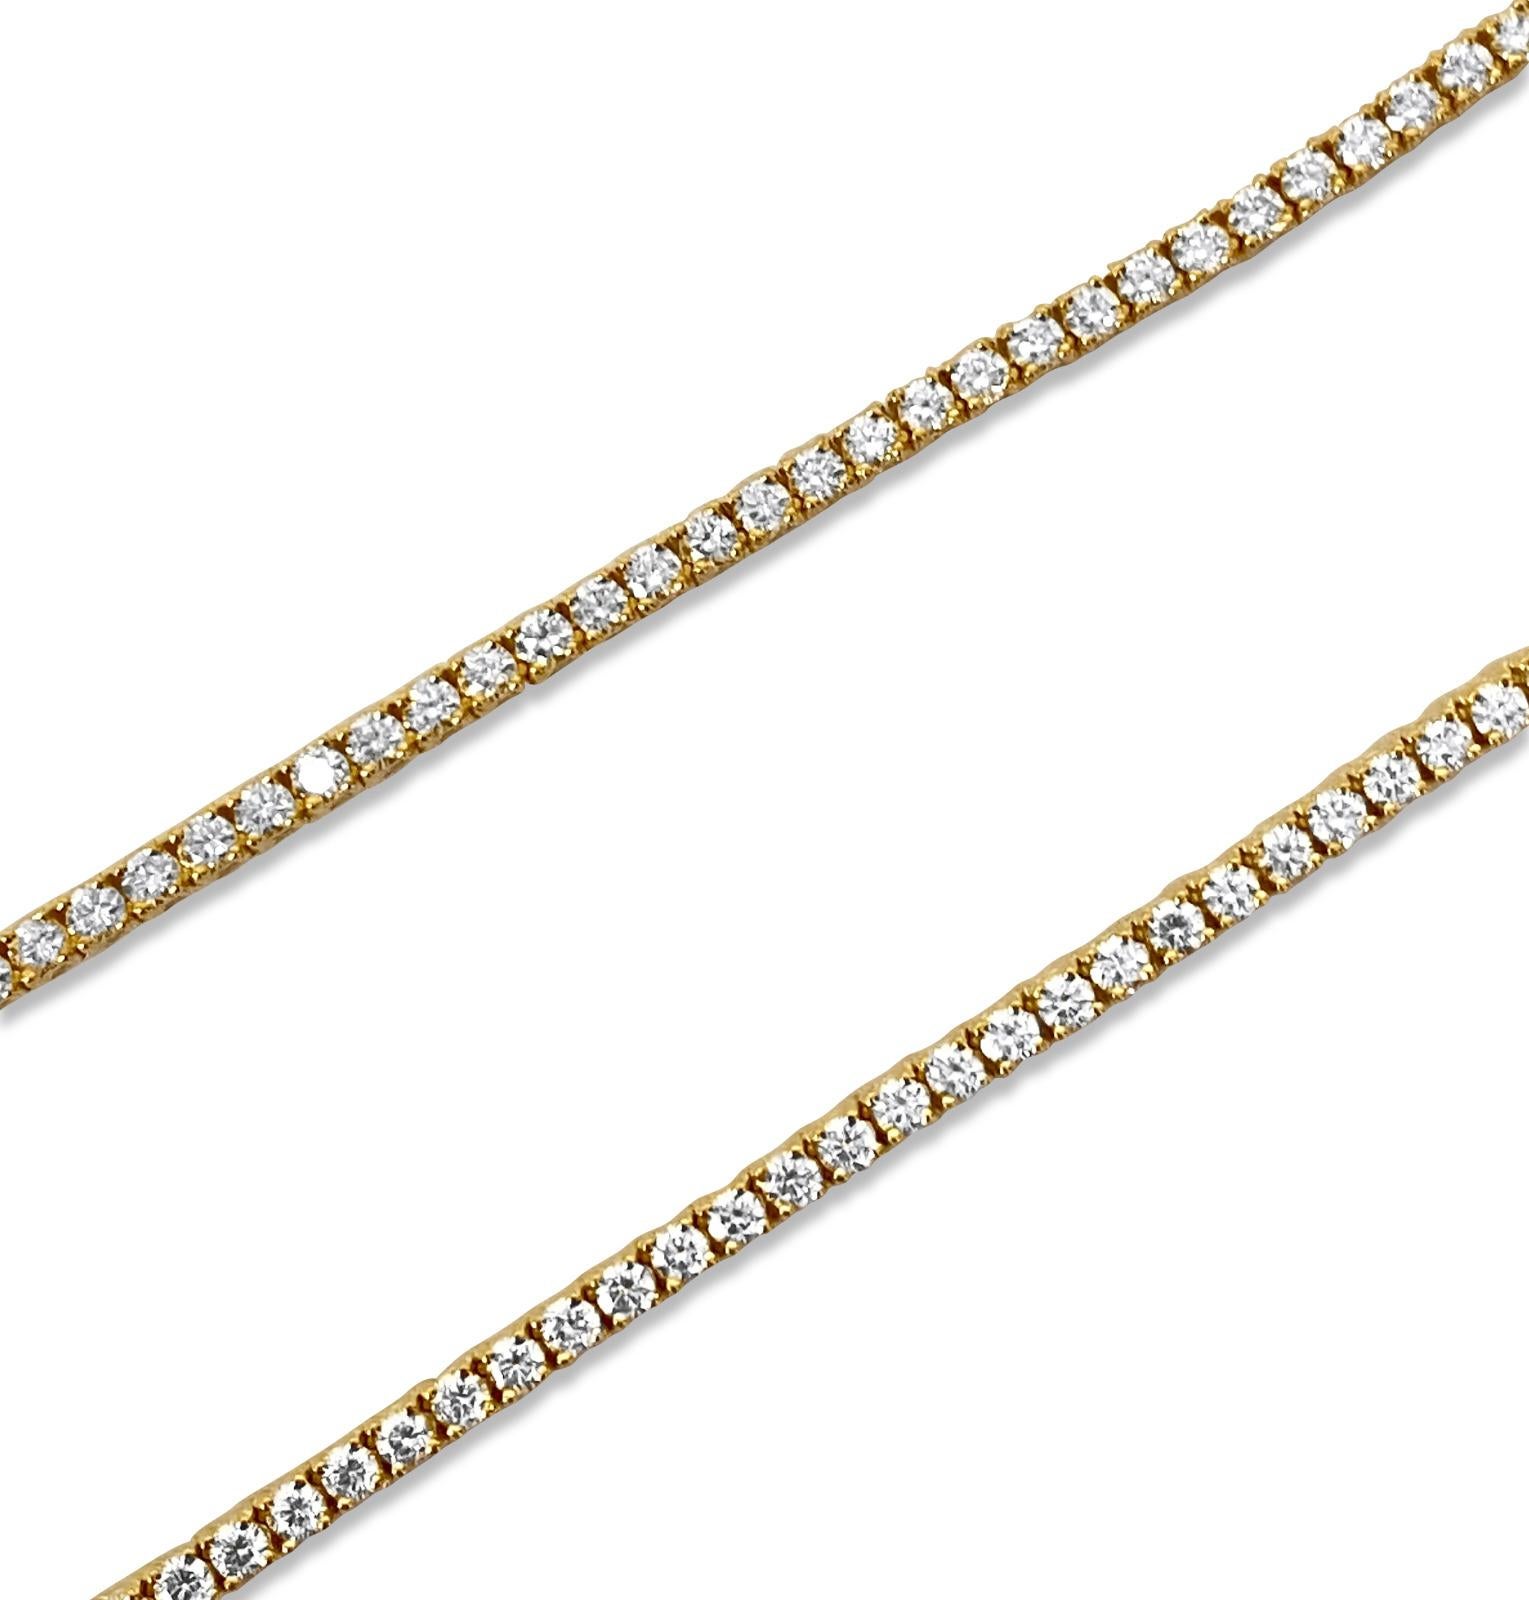 10k solid gold 
Diamond Tennis necklace 
9 carats of vvs diamonds all natural diamonds 

